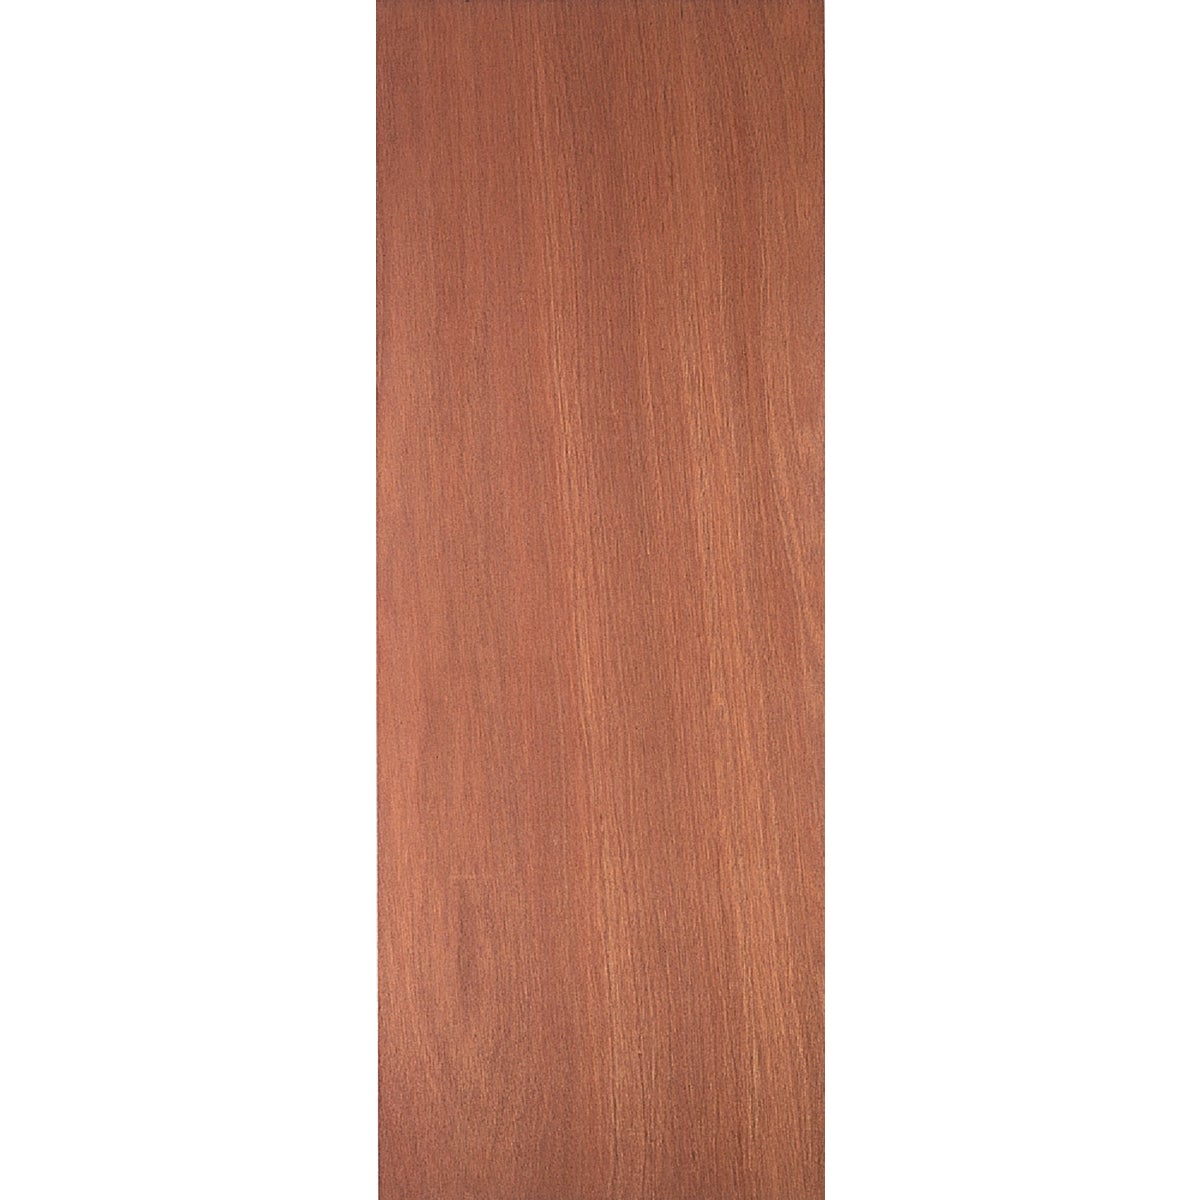 Masonite 36 In. W. x 80 in. H. Lauan Wood Solid Core Door Slab